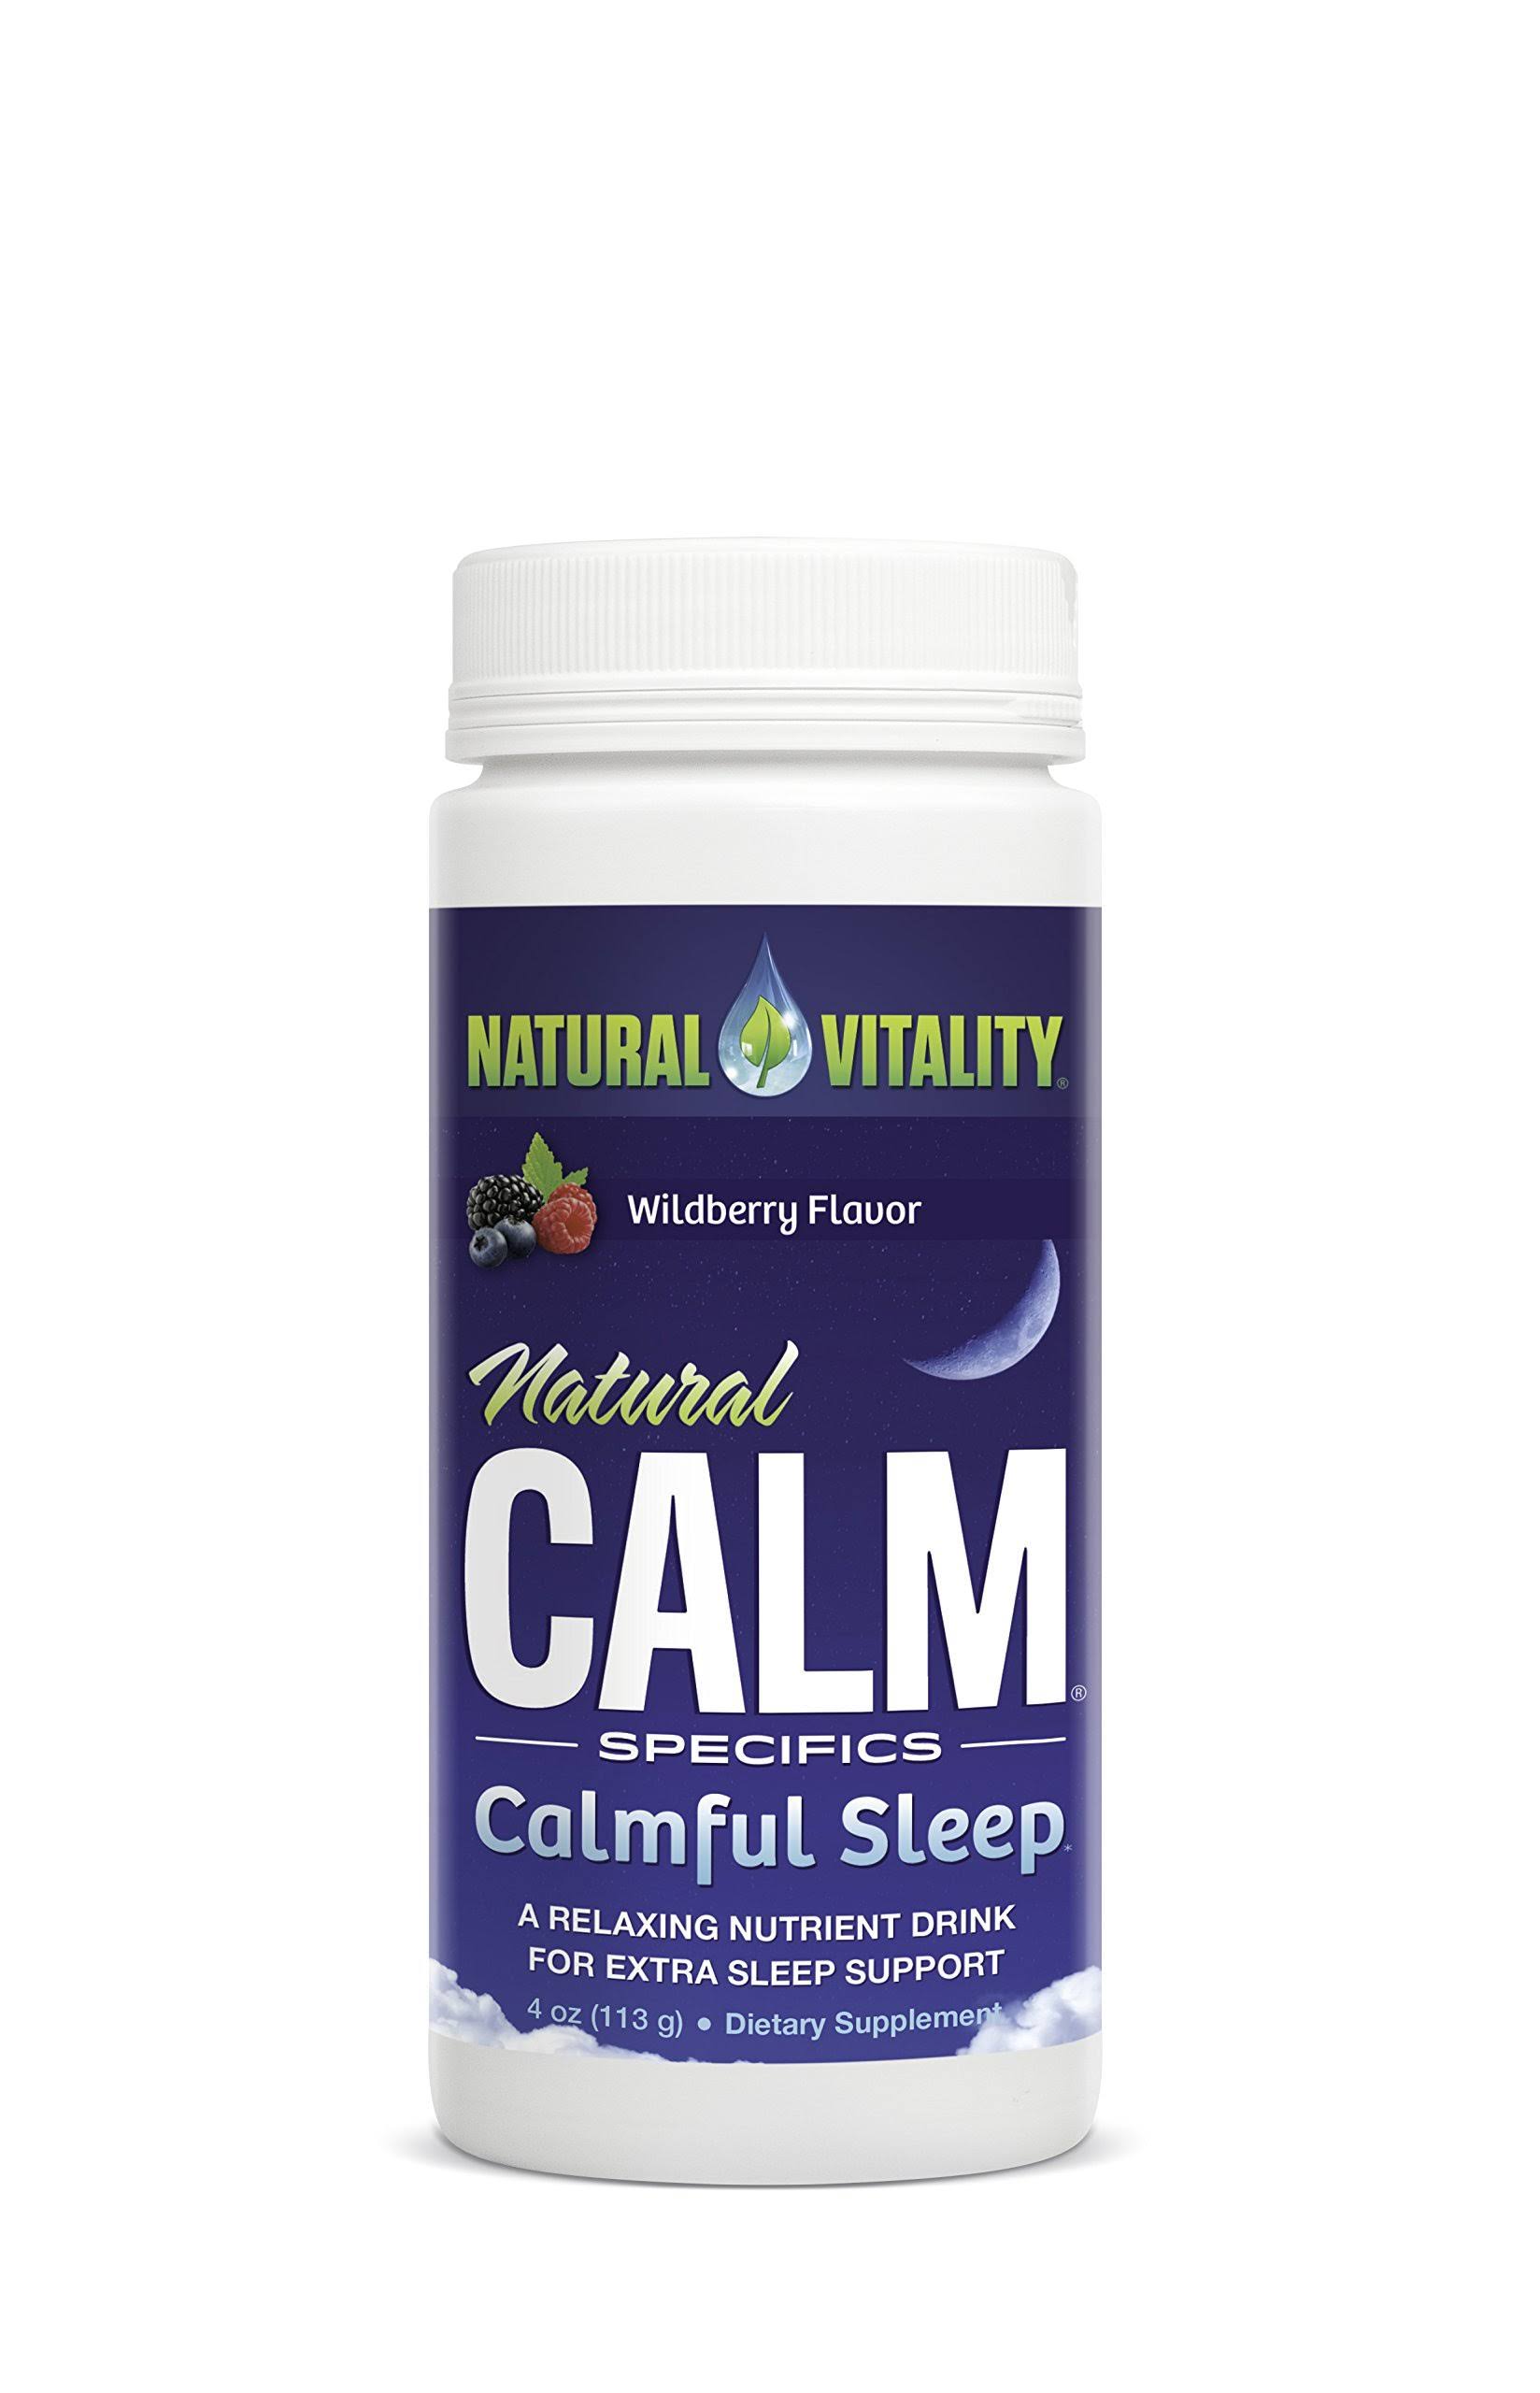 Natural Vitality Natural Calm Calmful Sleep - Wildberry Flavor, 4oz